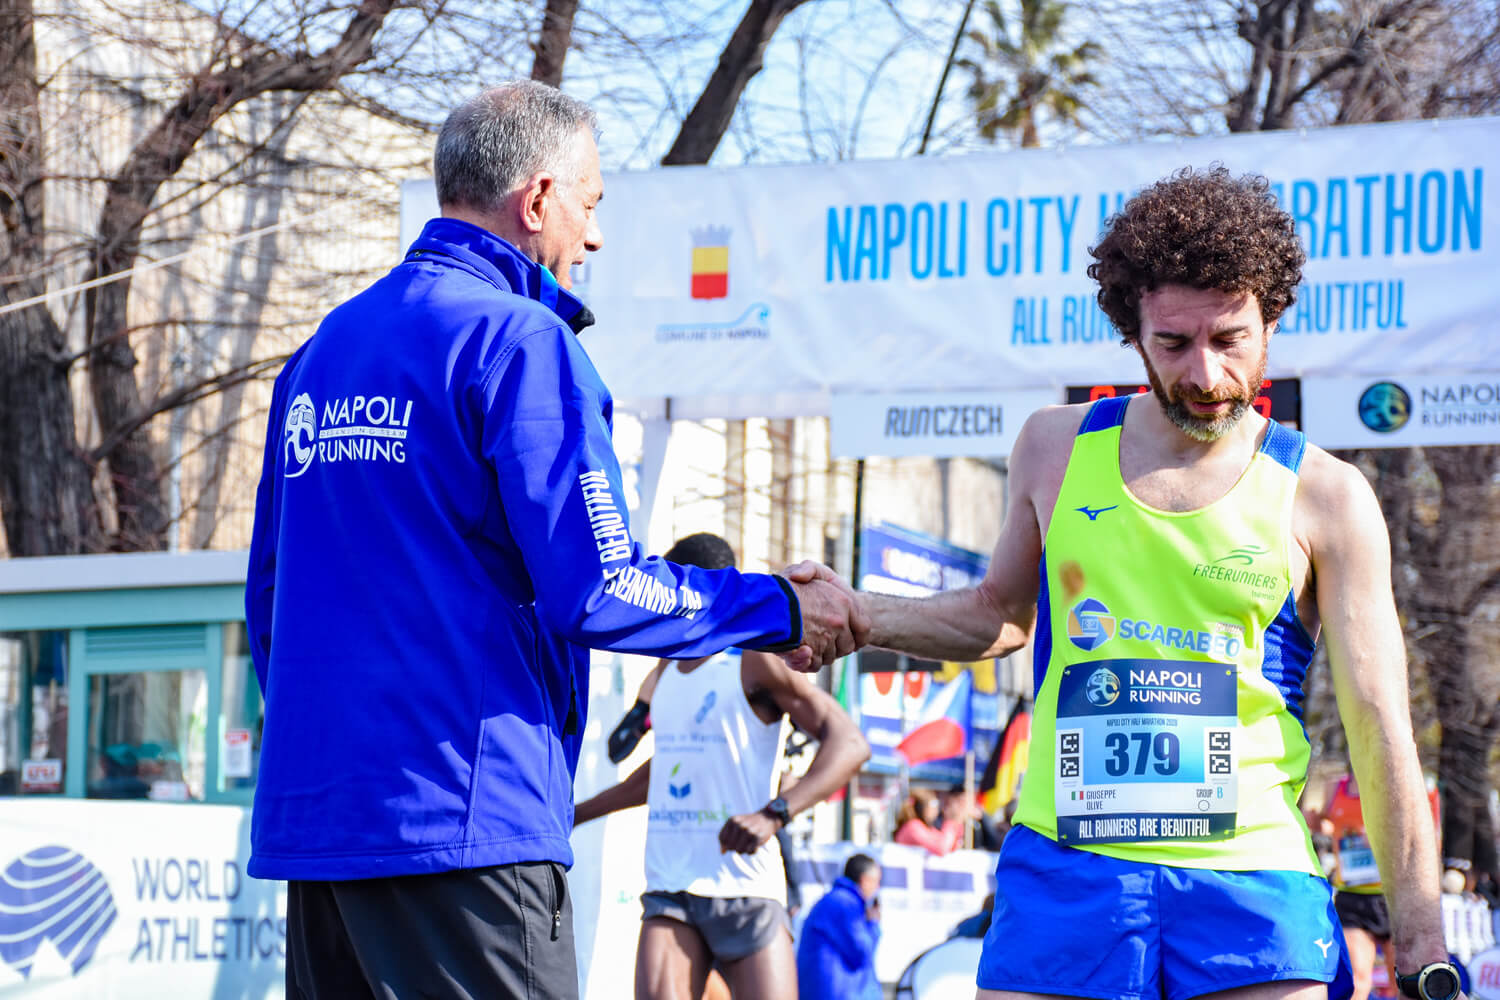 Napoli-City Half-Marathon-amicizia